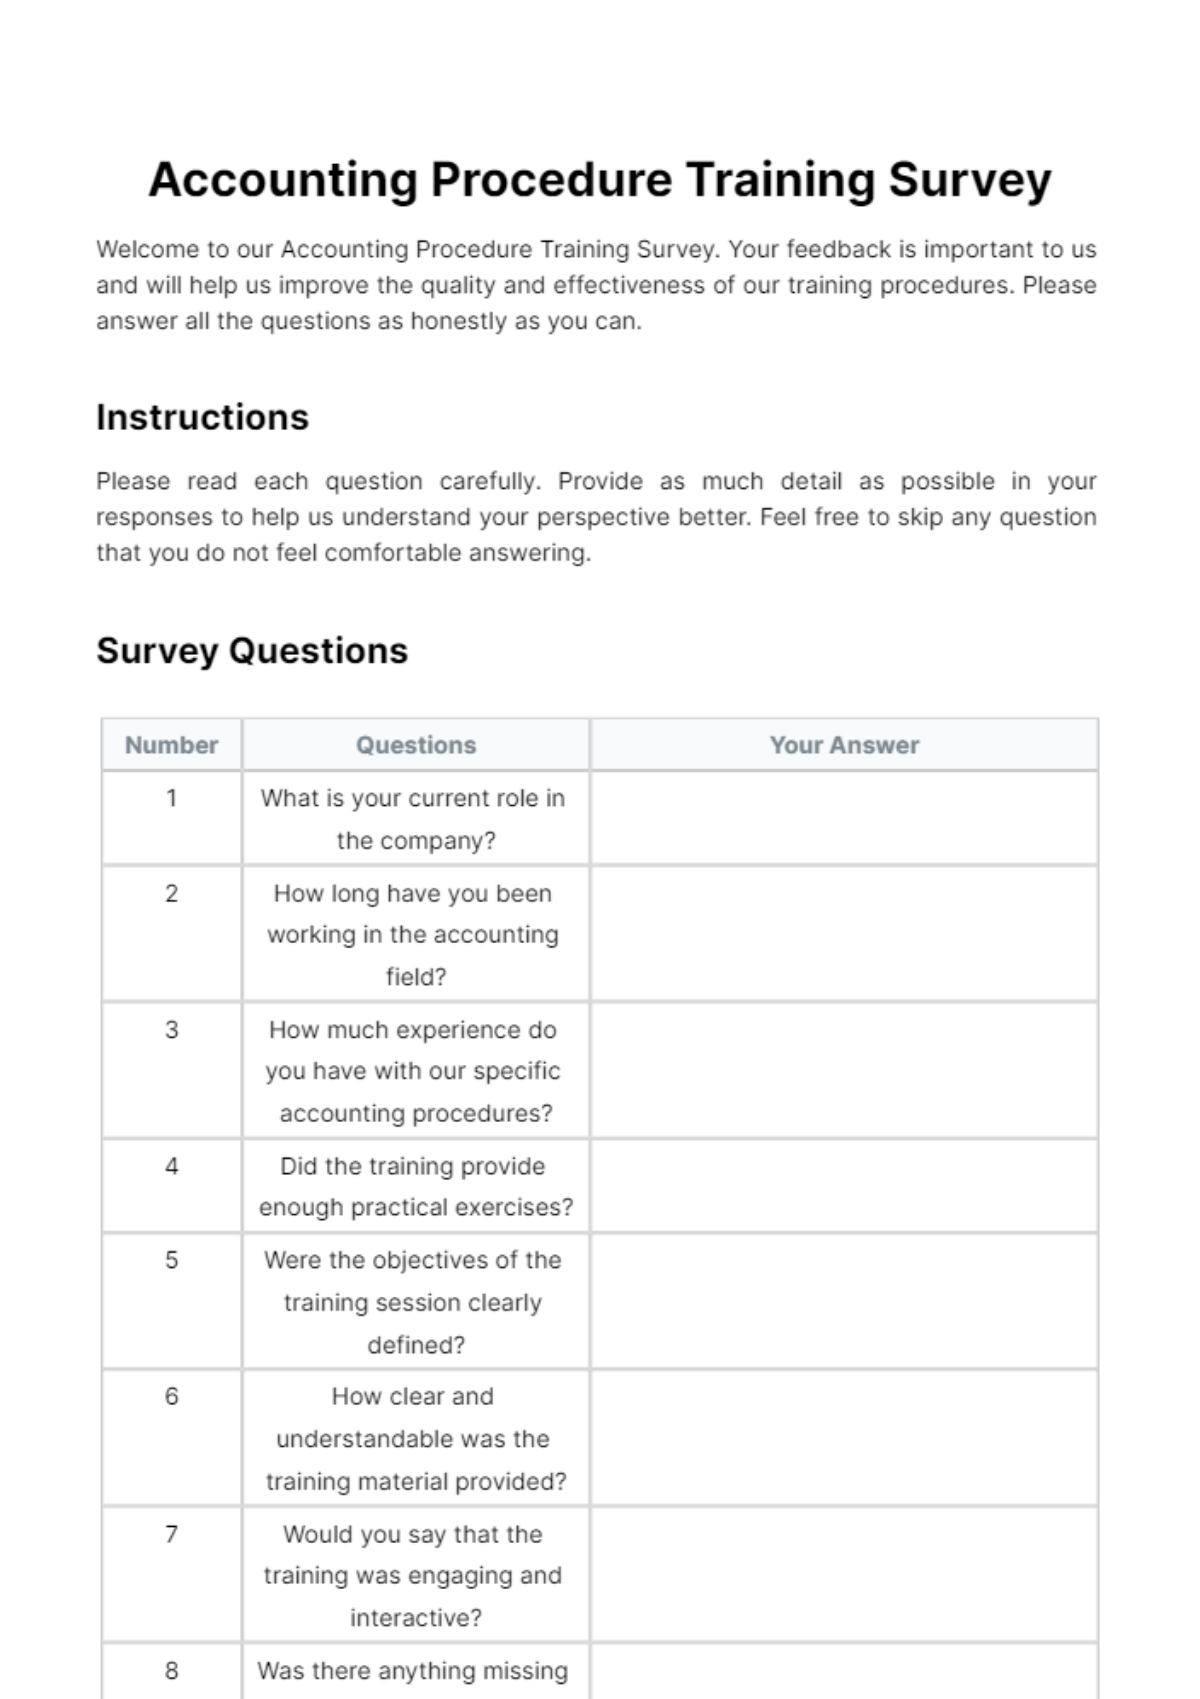 Accounting Procedure Training Survey Template